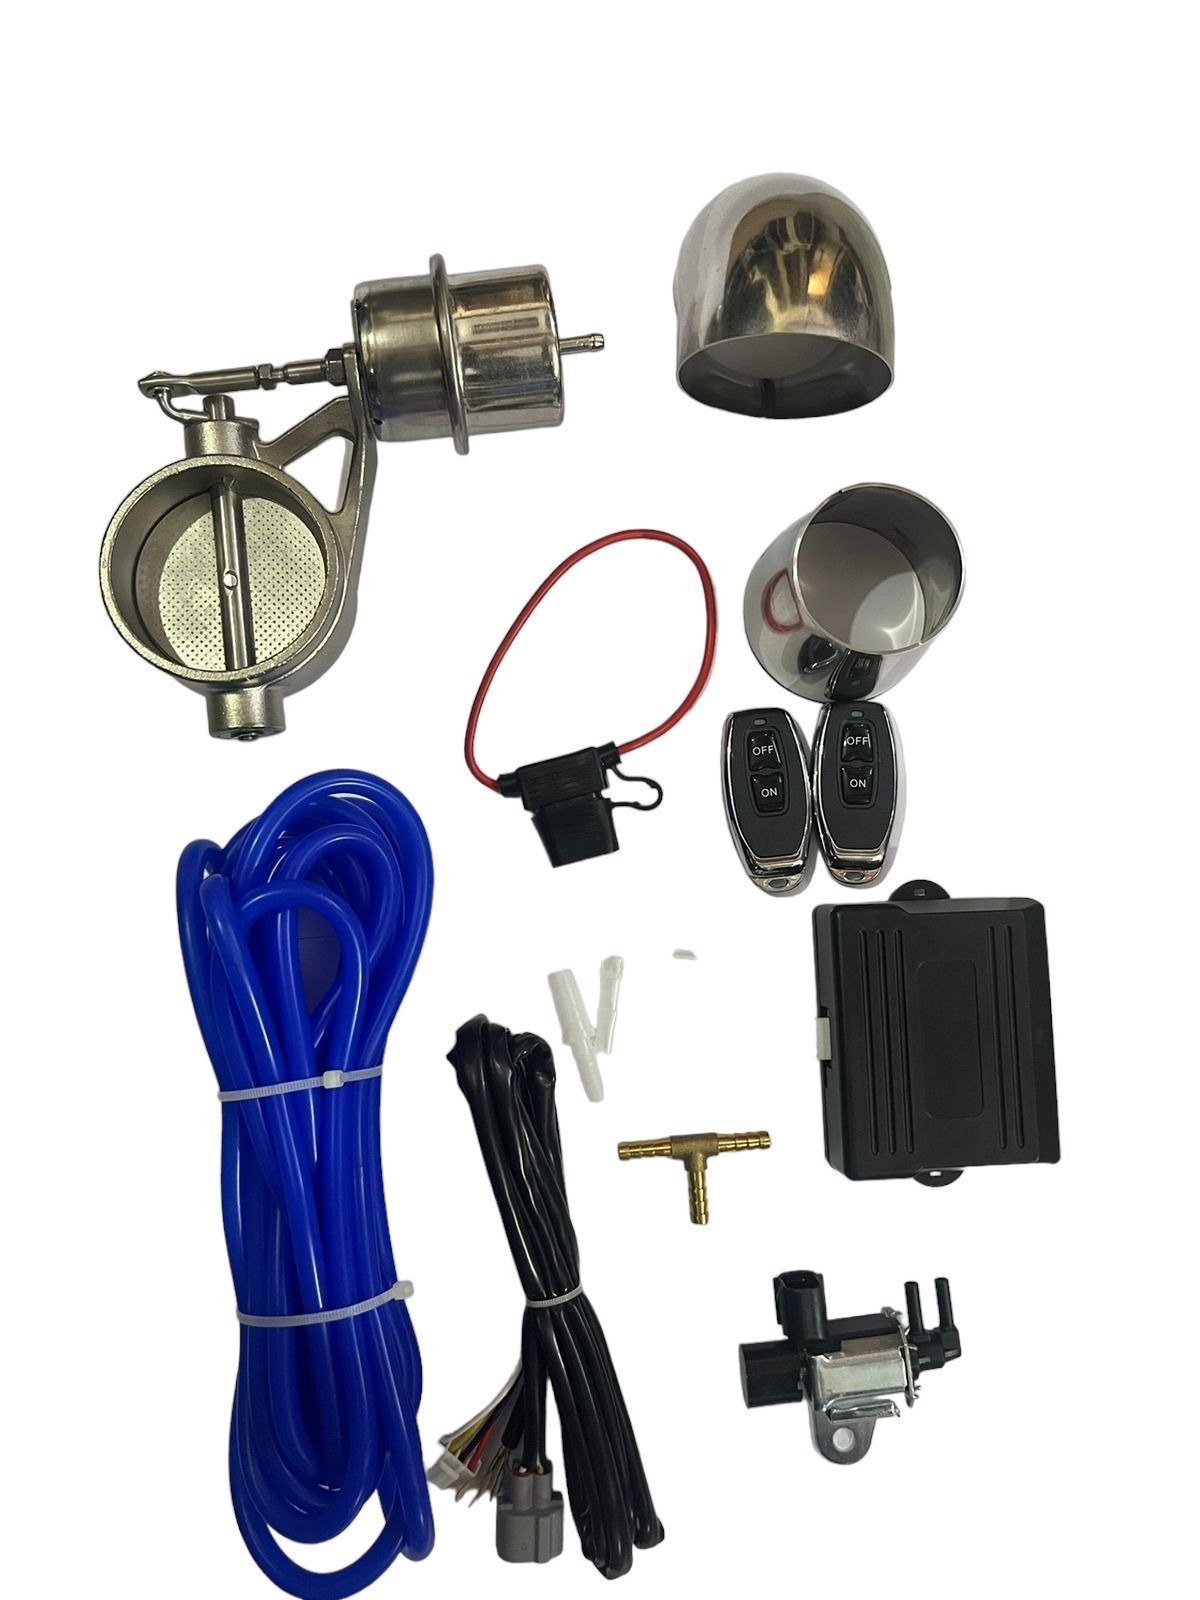 Exhaust Remote Controlled Valvetronic Cutout Valve Set Kit Image 